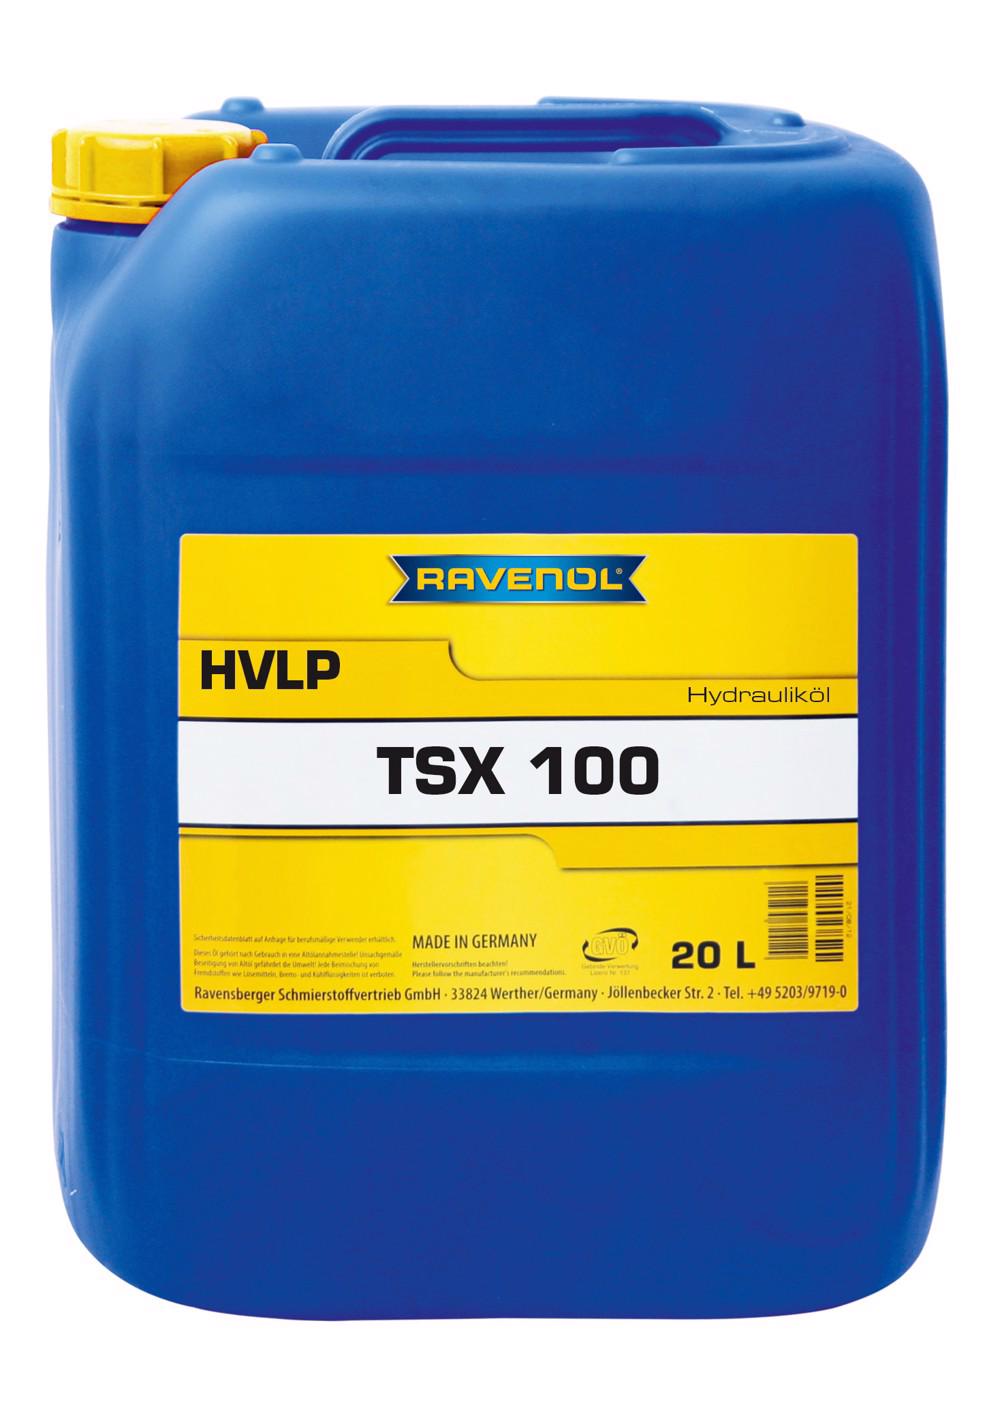 RAVENOL Hydraulikoel TSX 100 (HVLP)  20 L